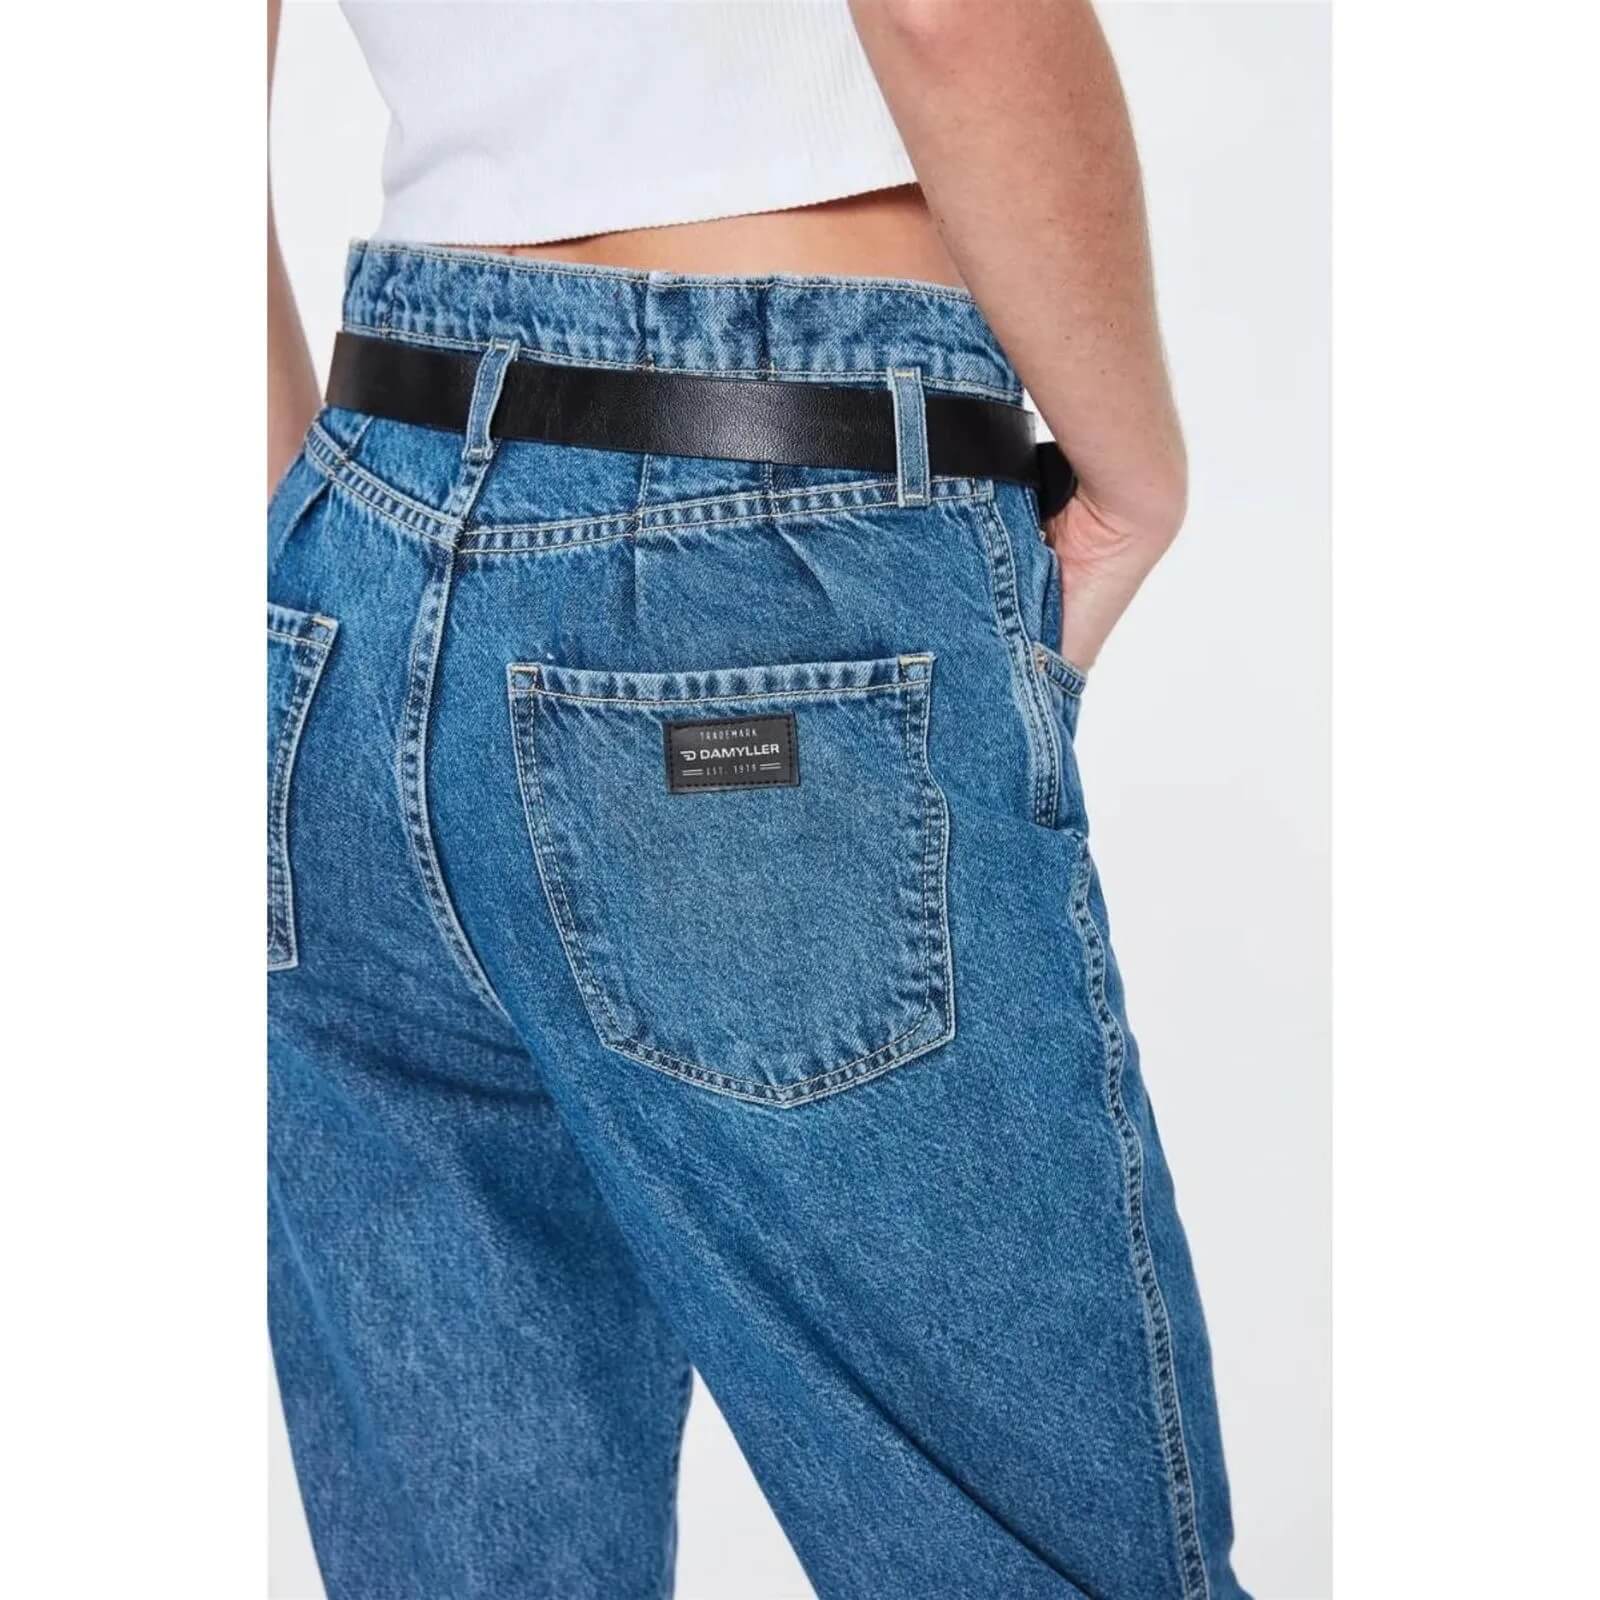 Calça Jeans Clochard Damyller Cropped Feminina